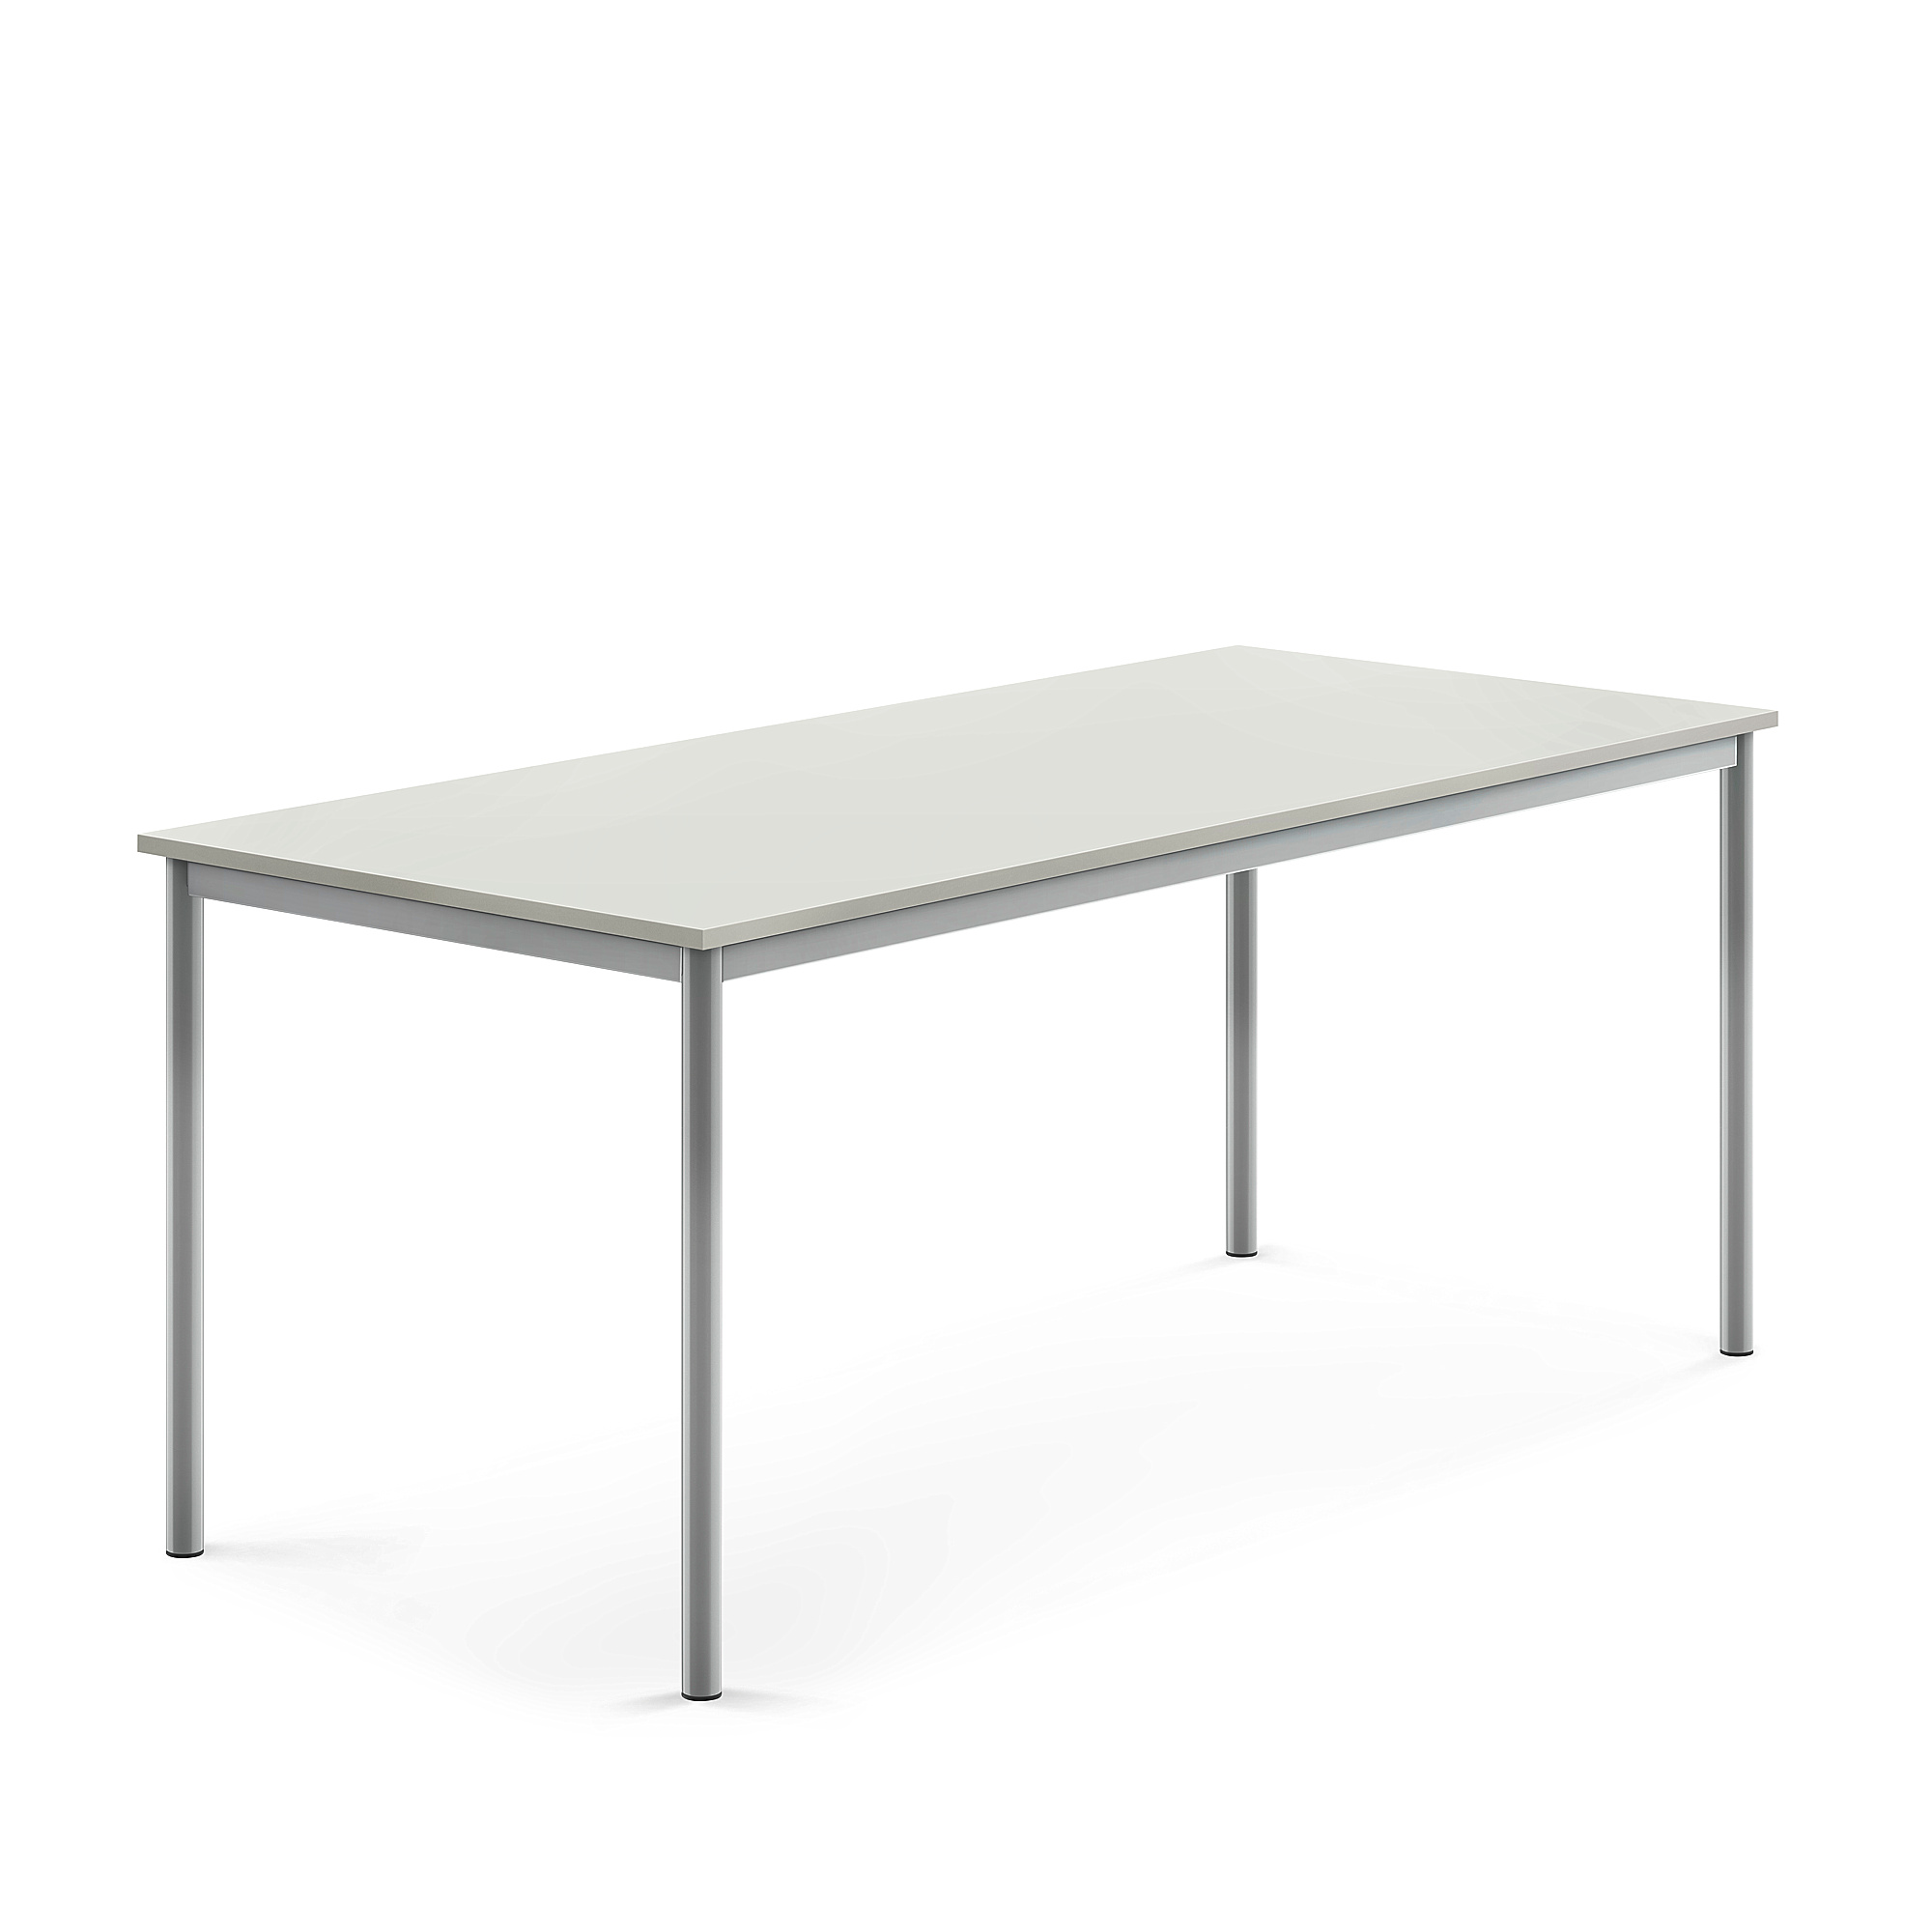 Stůl BORÅS, 1800x800x720 mm, stříbrné nohy, HPL deska, šedá